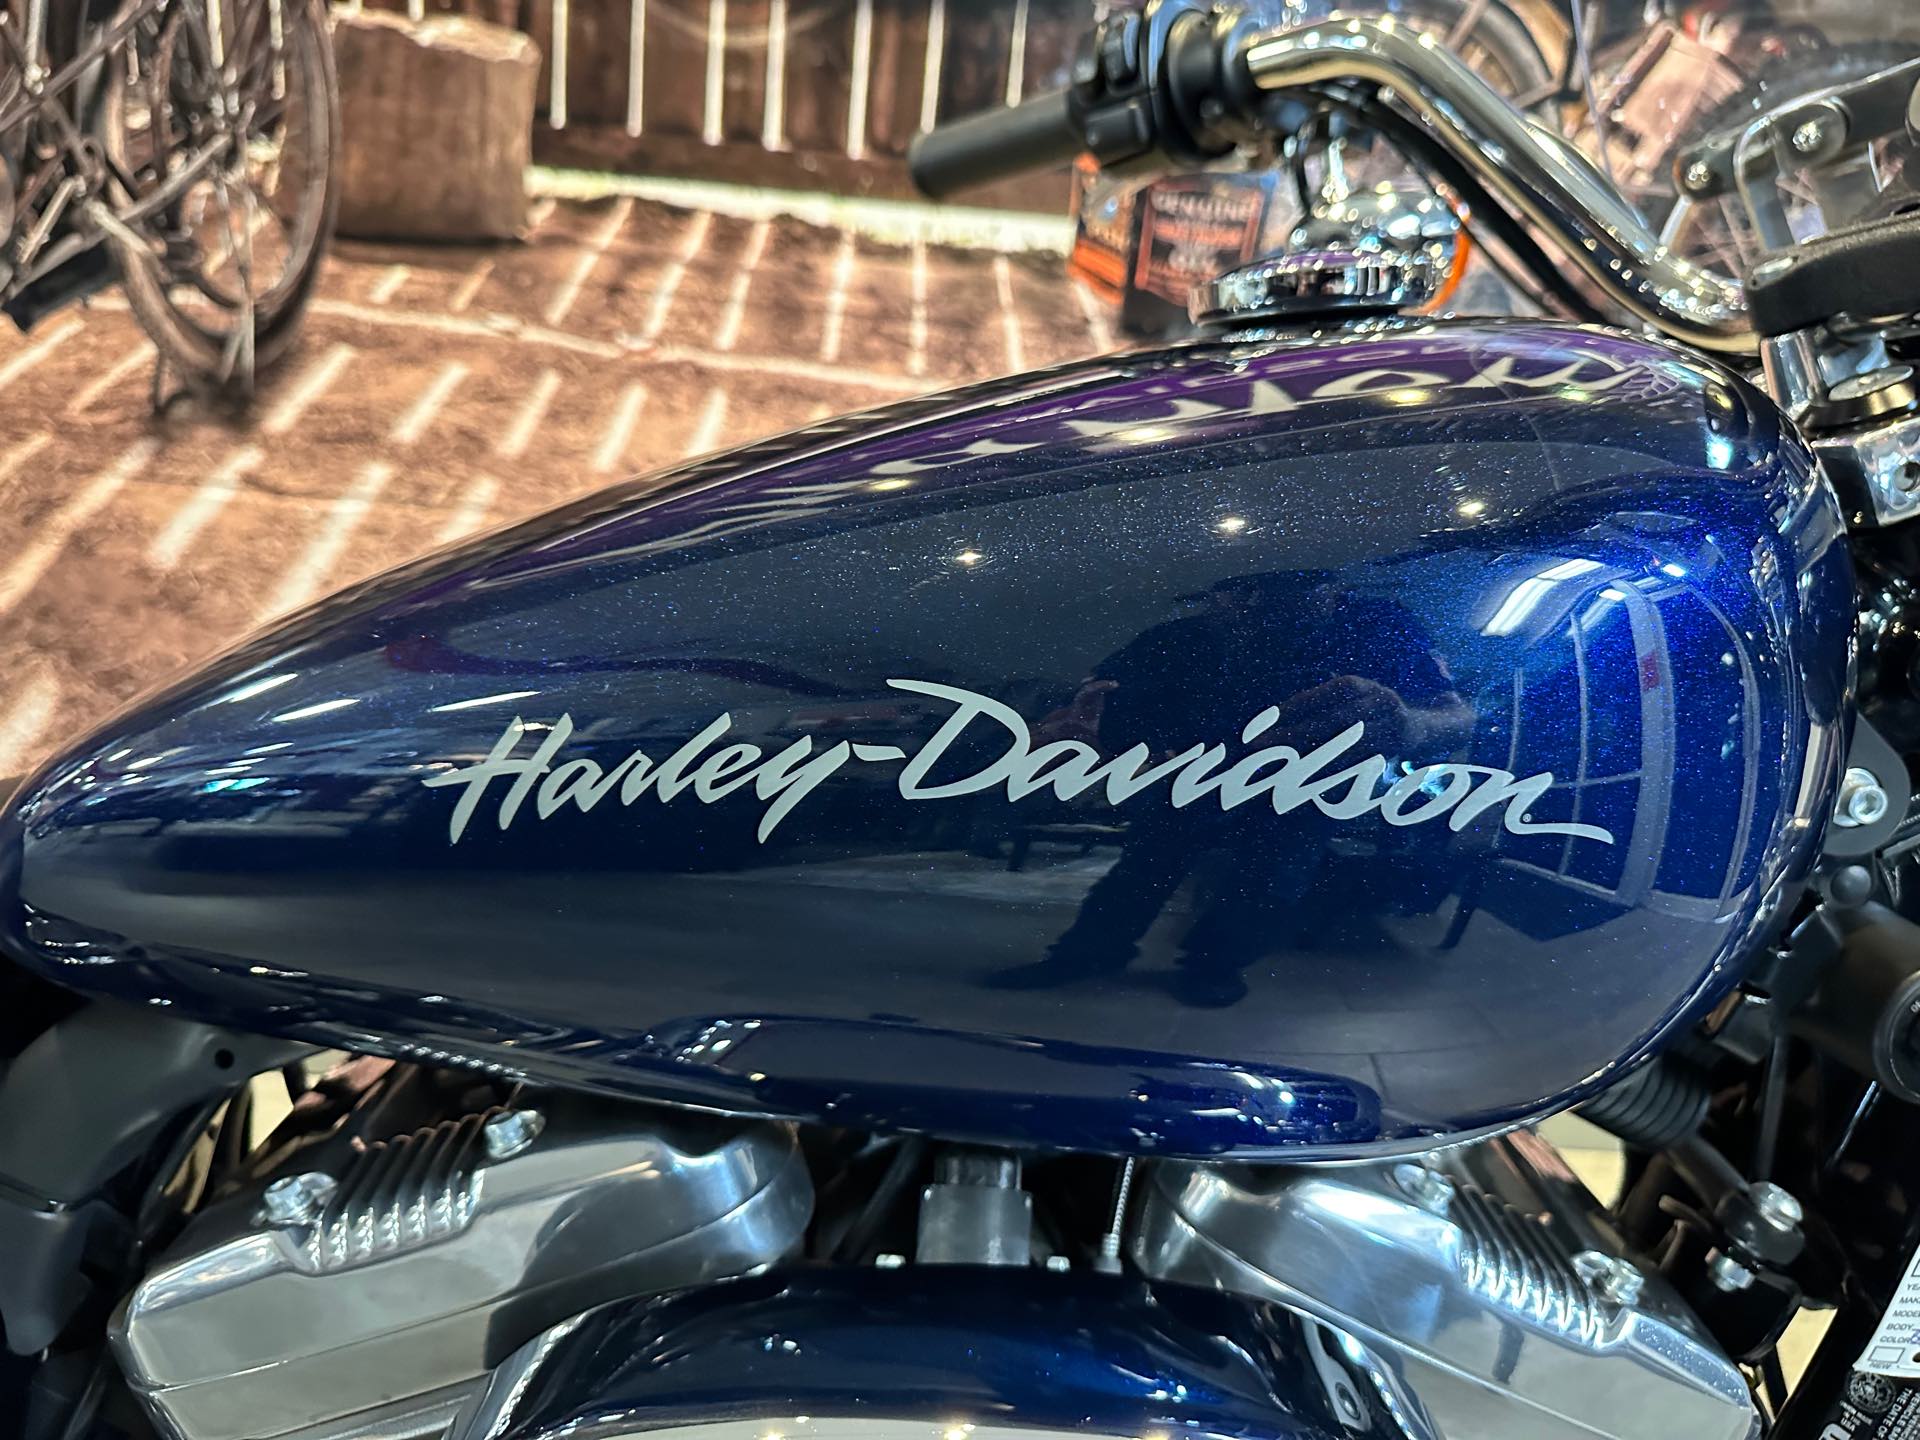 2013 Harley-Davidson Sportster SuperLow at Phantom Harley-Davidson